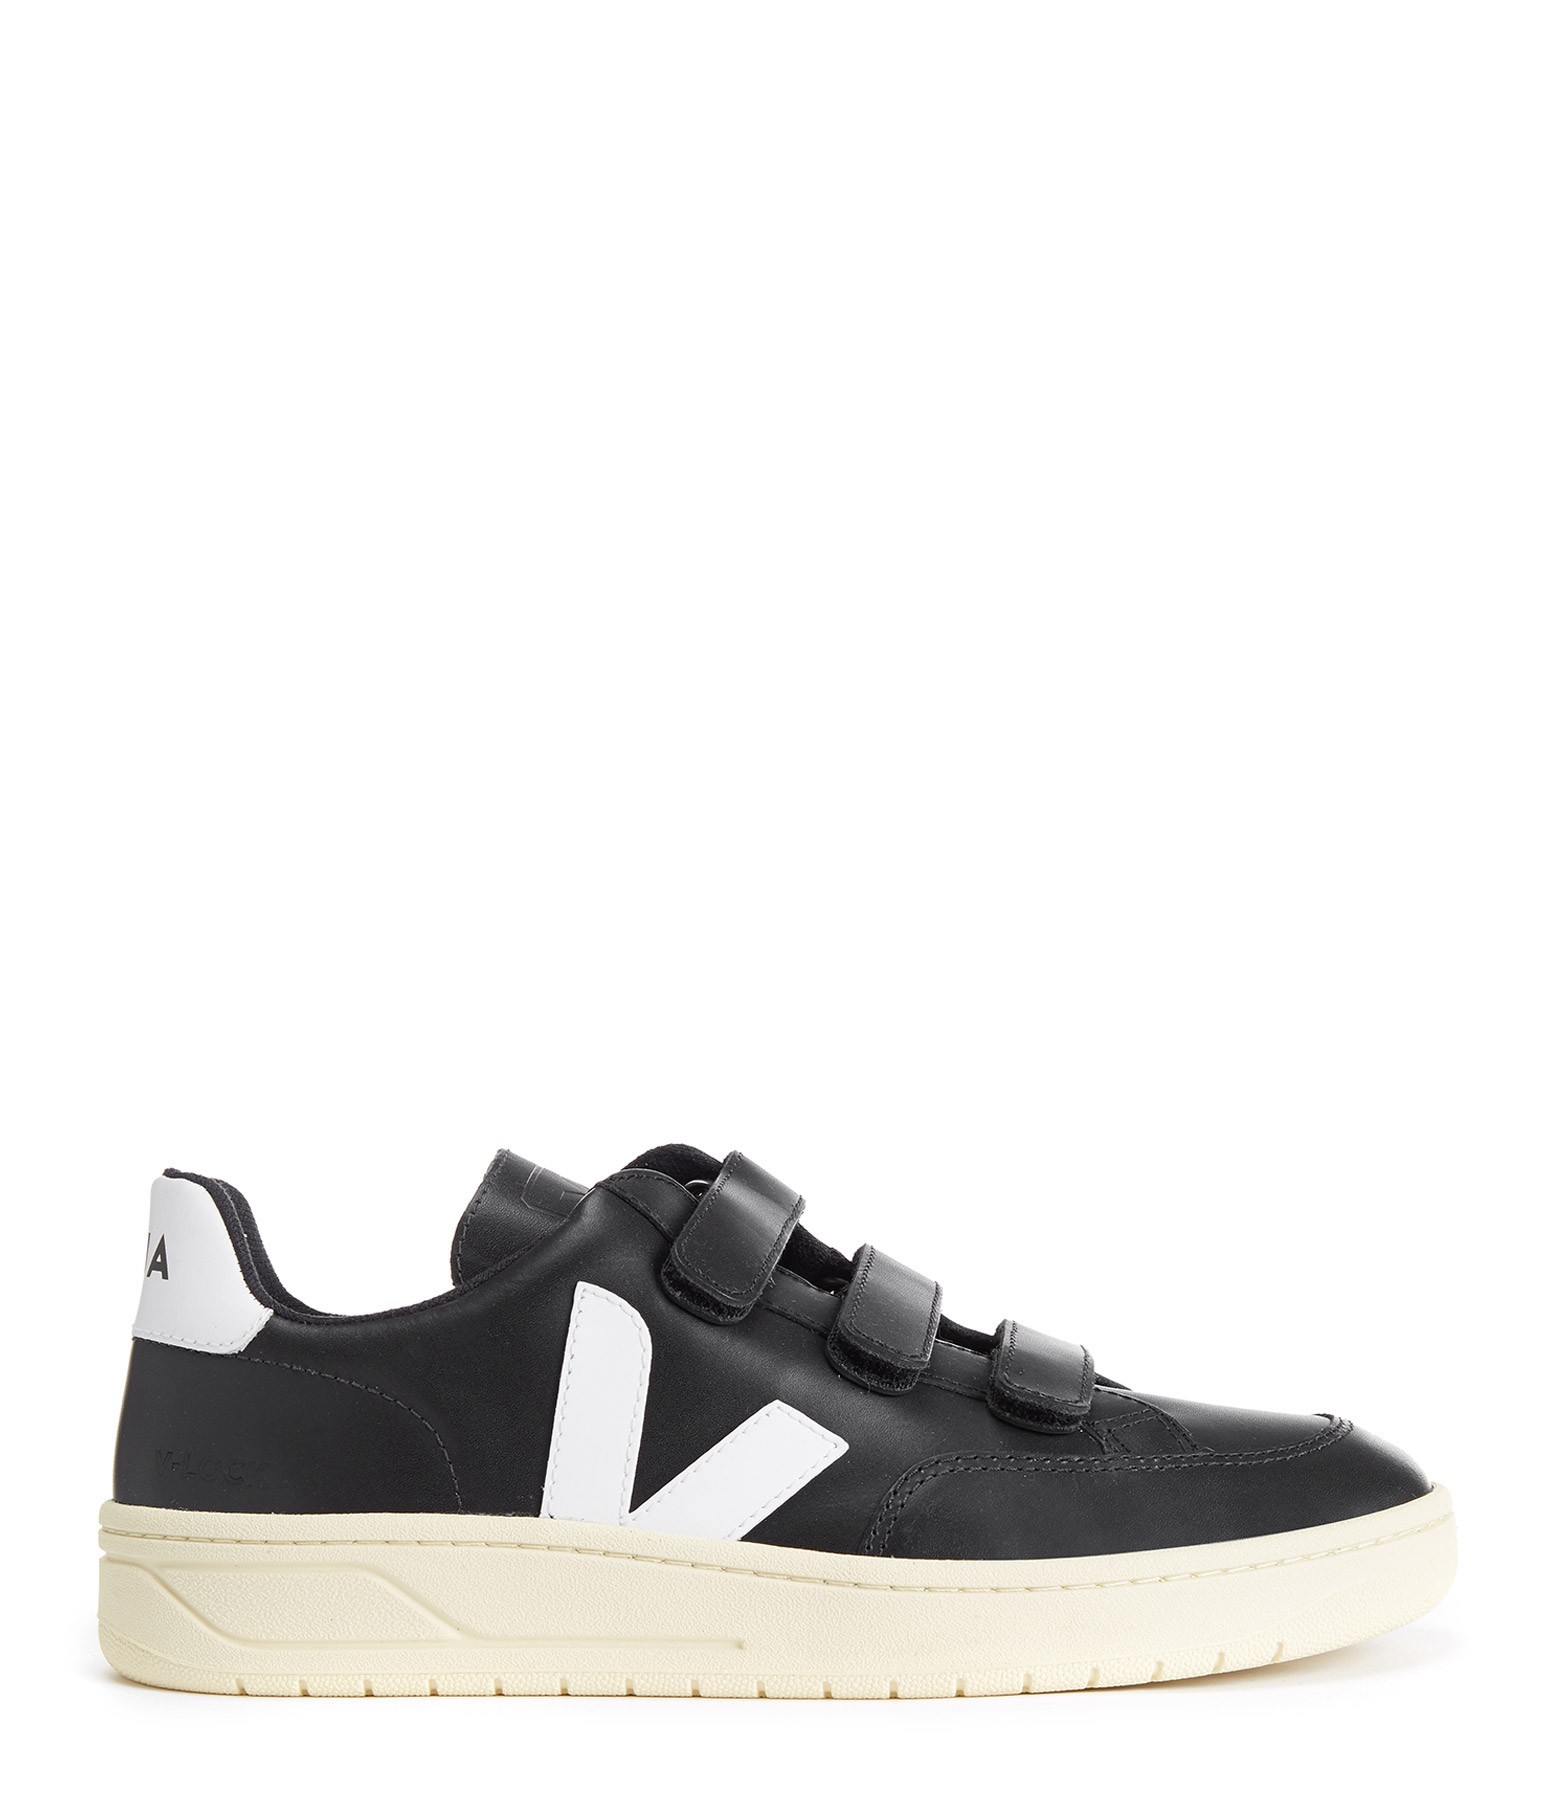 VEJA V-Lock Sneakers in pelle nero bianco XC022102 - Nuova Collezione Primavera Estate 2020